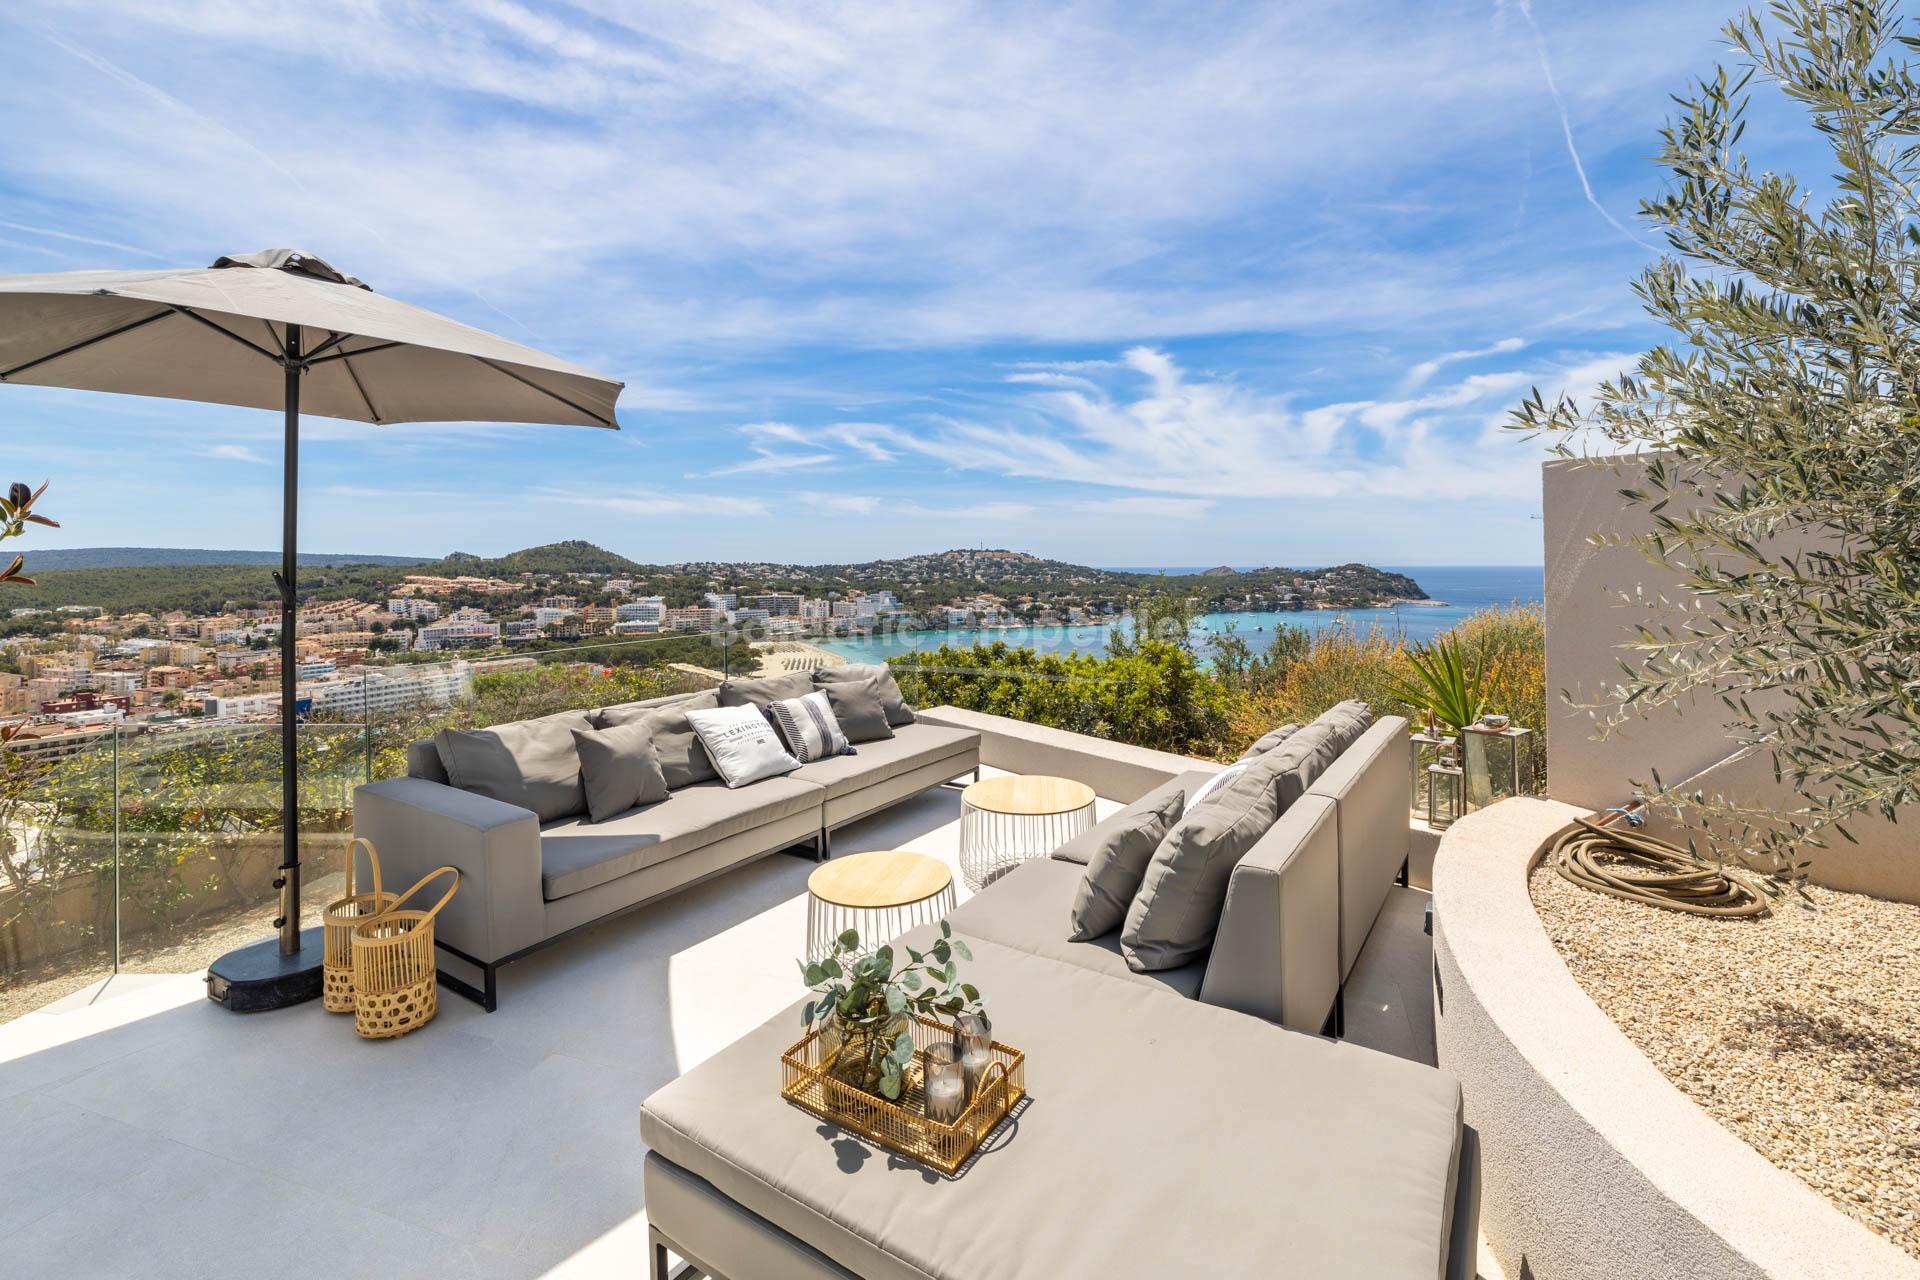 Chic villa with heated pool and sea views for sale in Santa Ponsa, Mallorca